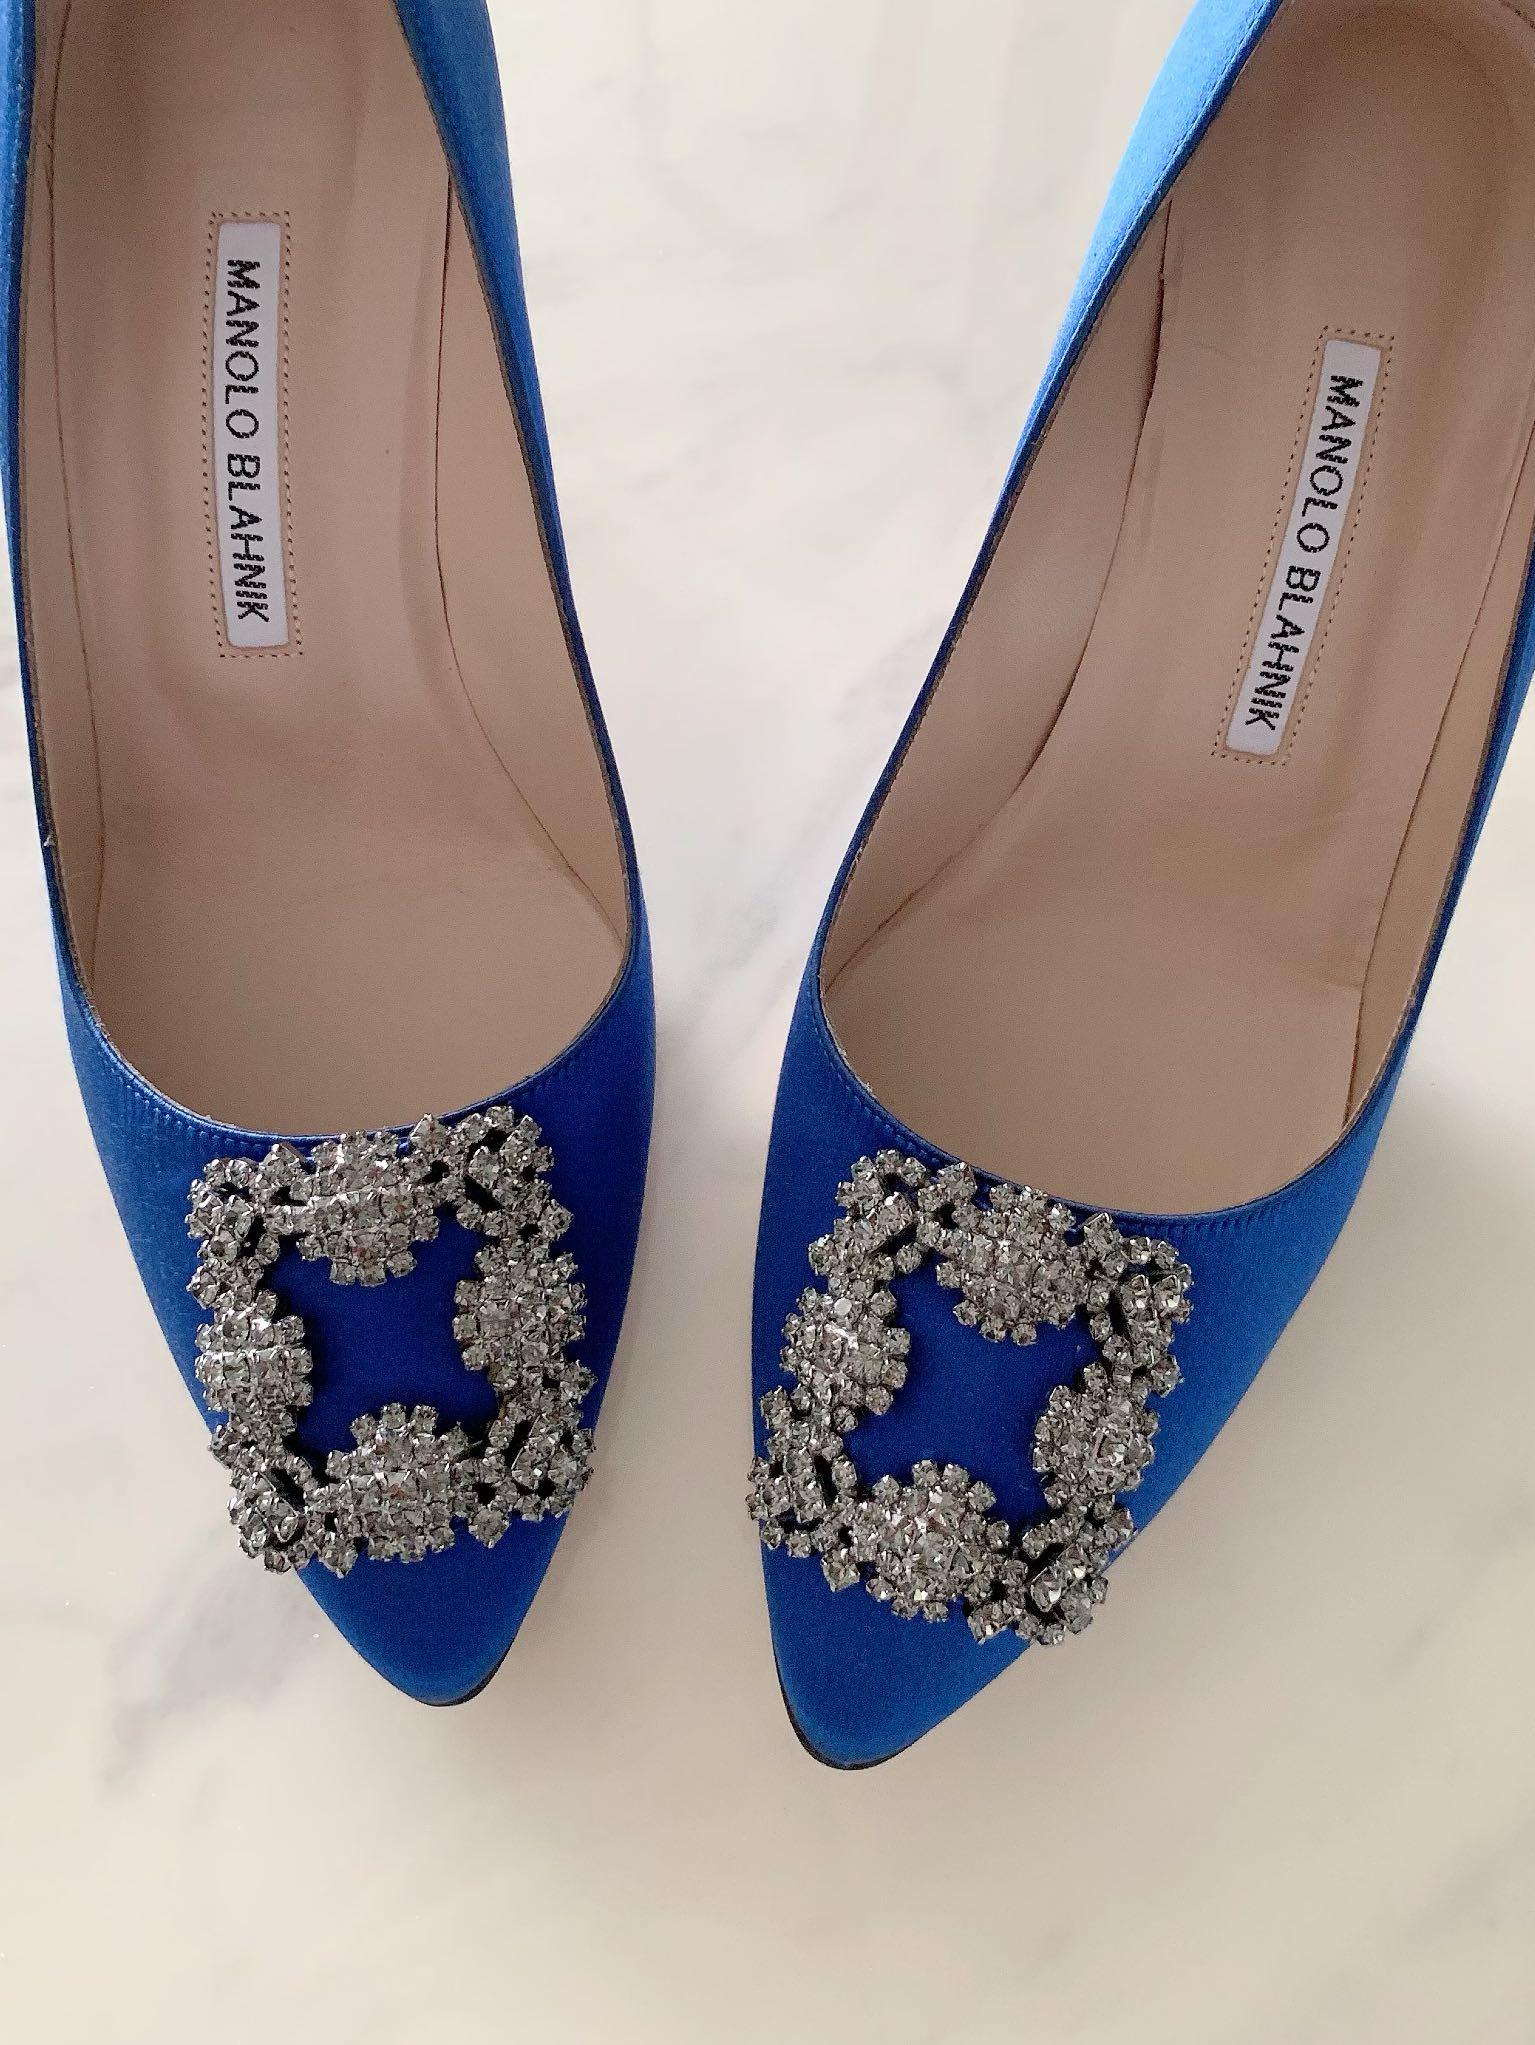 royal blue and black heels